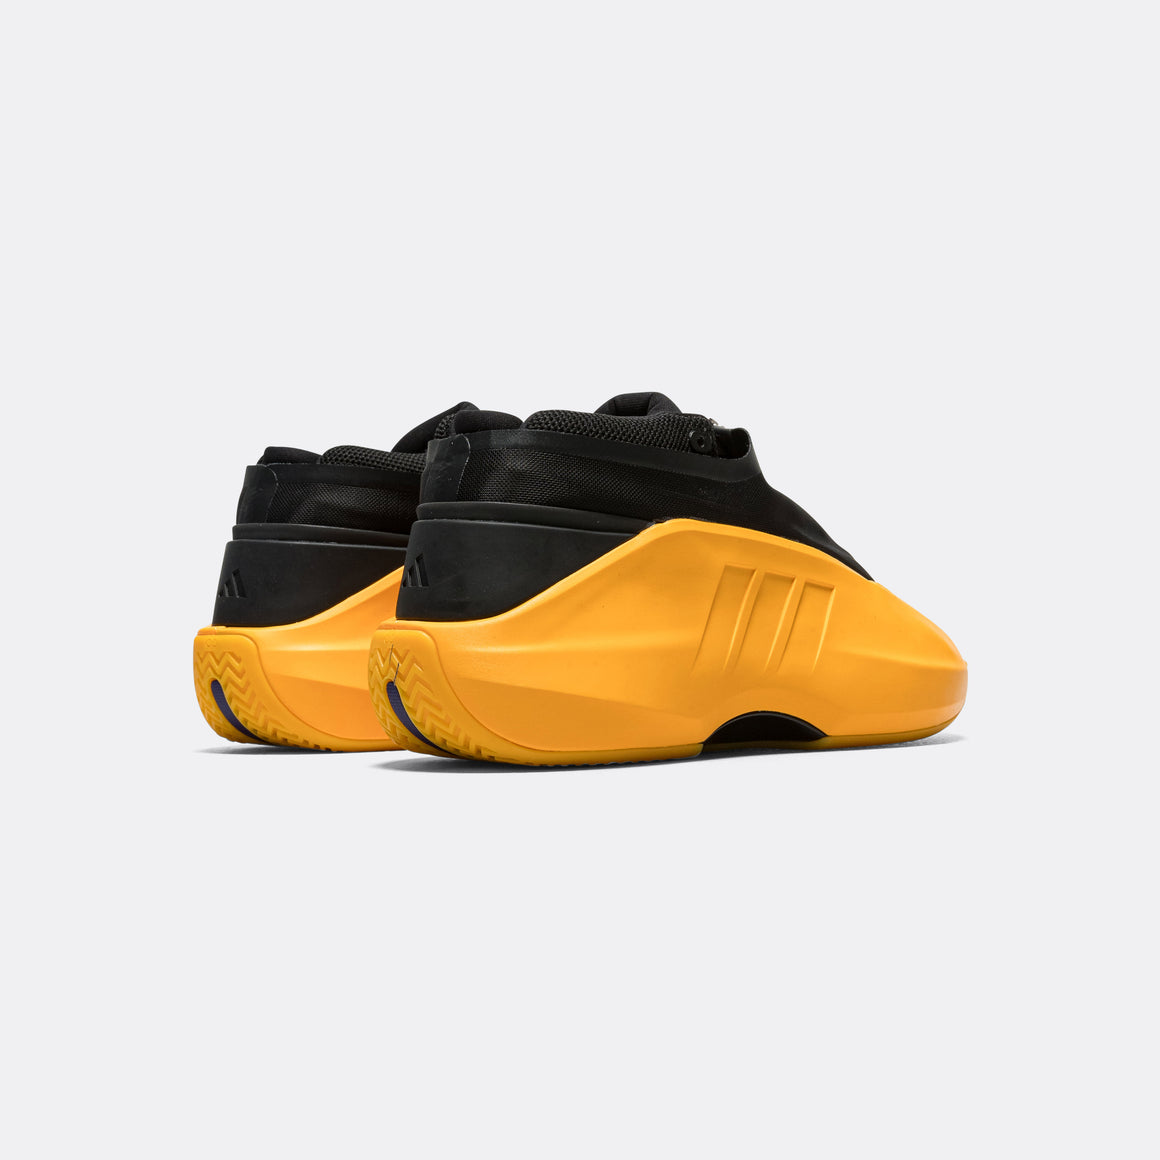 adidas - Crazy IIINFINITY - Crew Yellow/Core Black - UP THERE